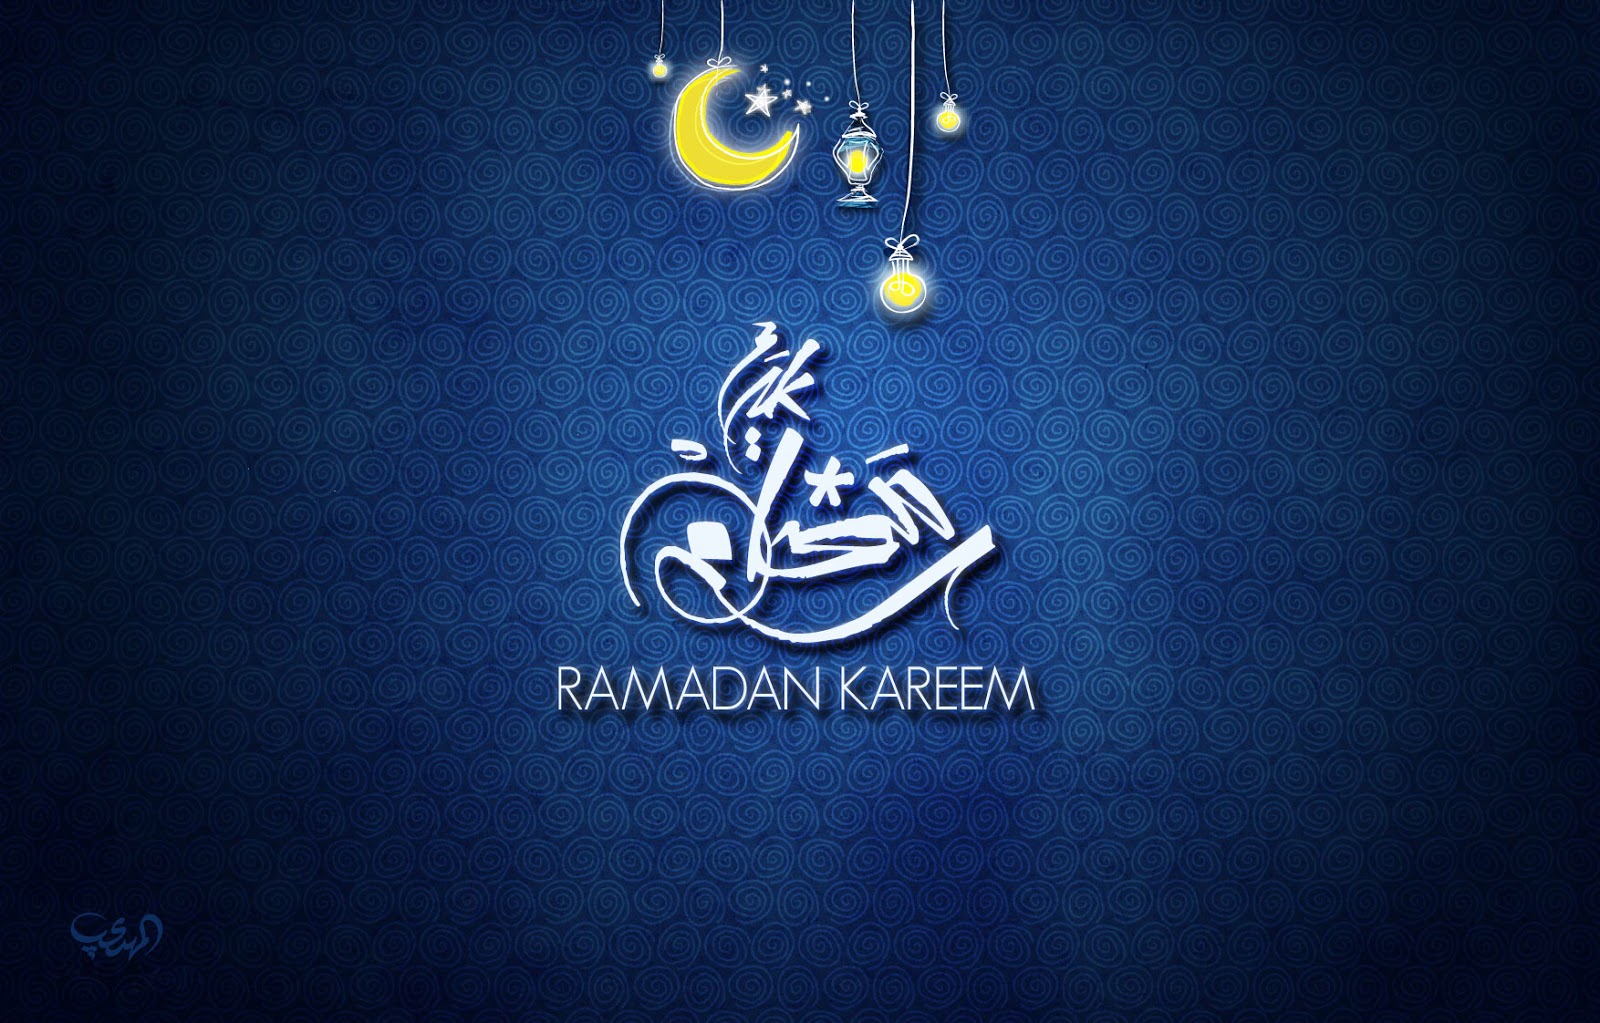 صور رمضان 2020 أجمل صور فوانيس رمضان 2021 بطاقات تهنئة لرمضان تهنئة رمضان بالأسماء 16